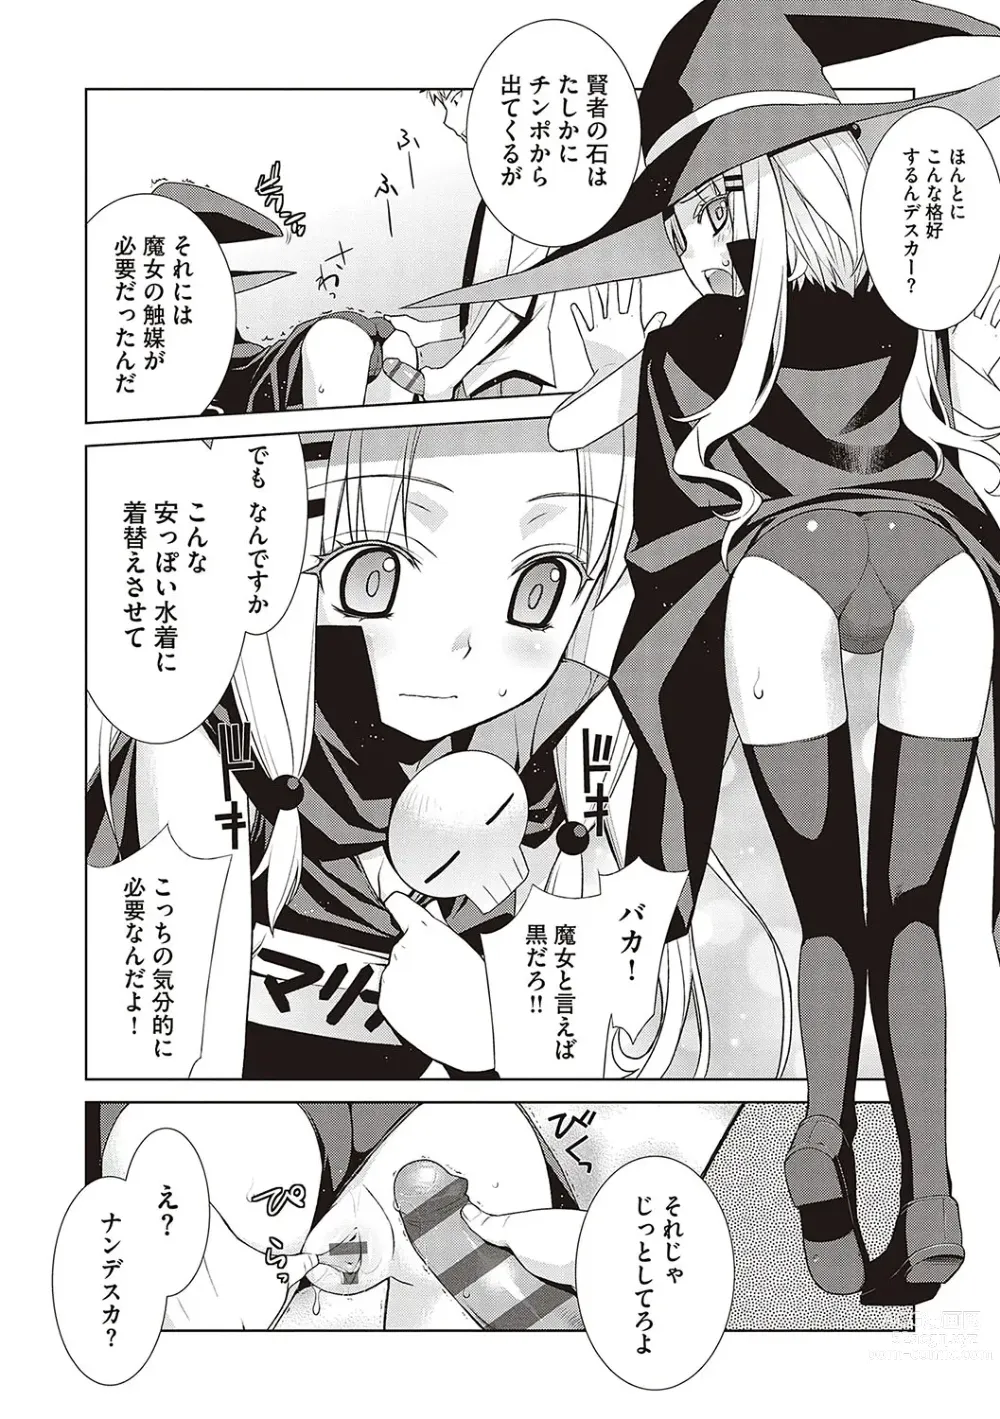 Page 255 of manga KOAKUMA DAISY